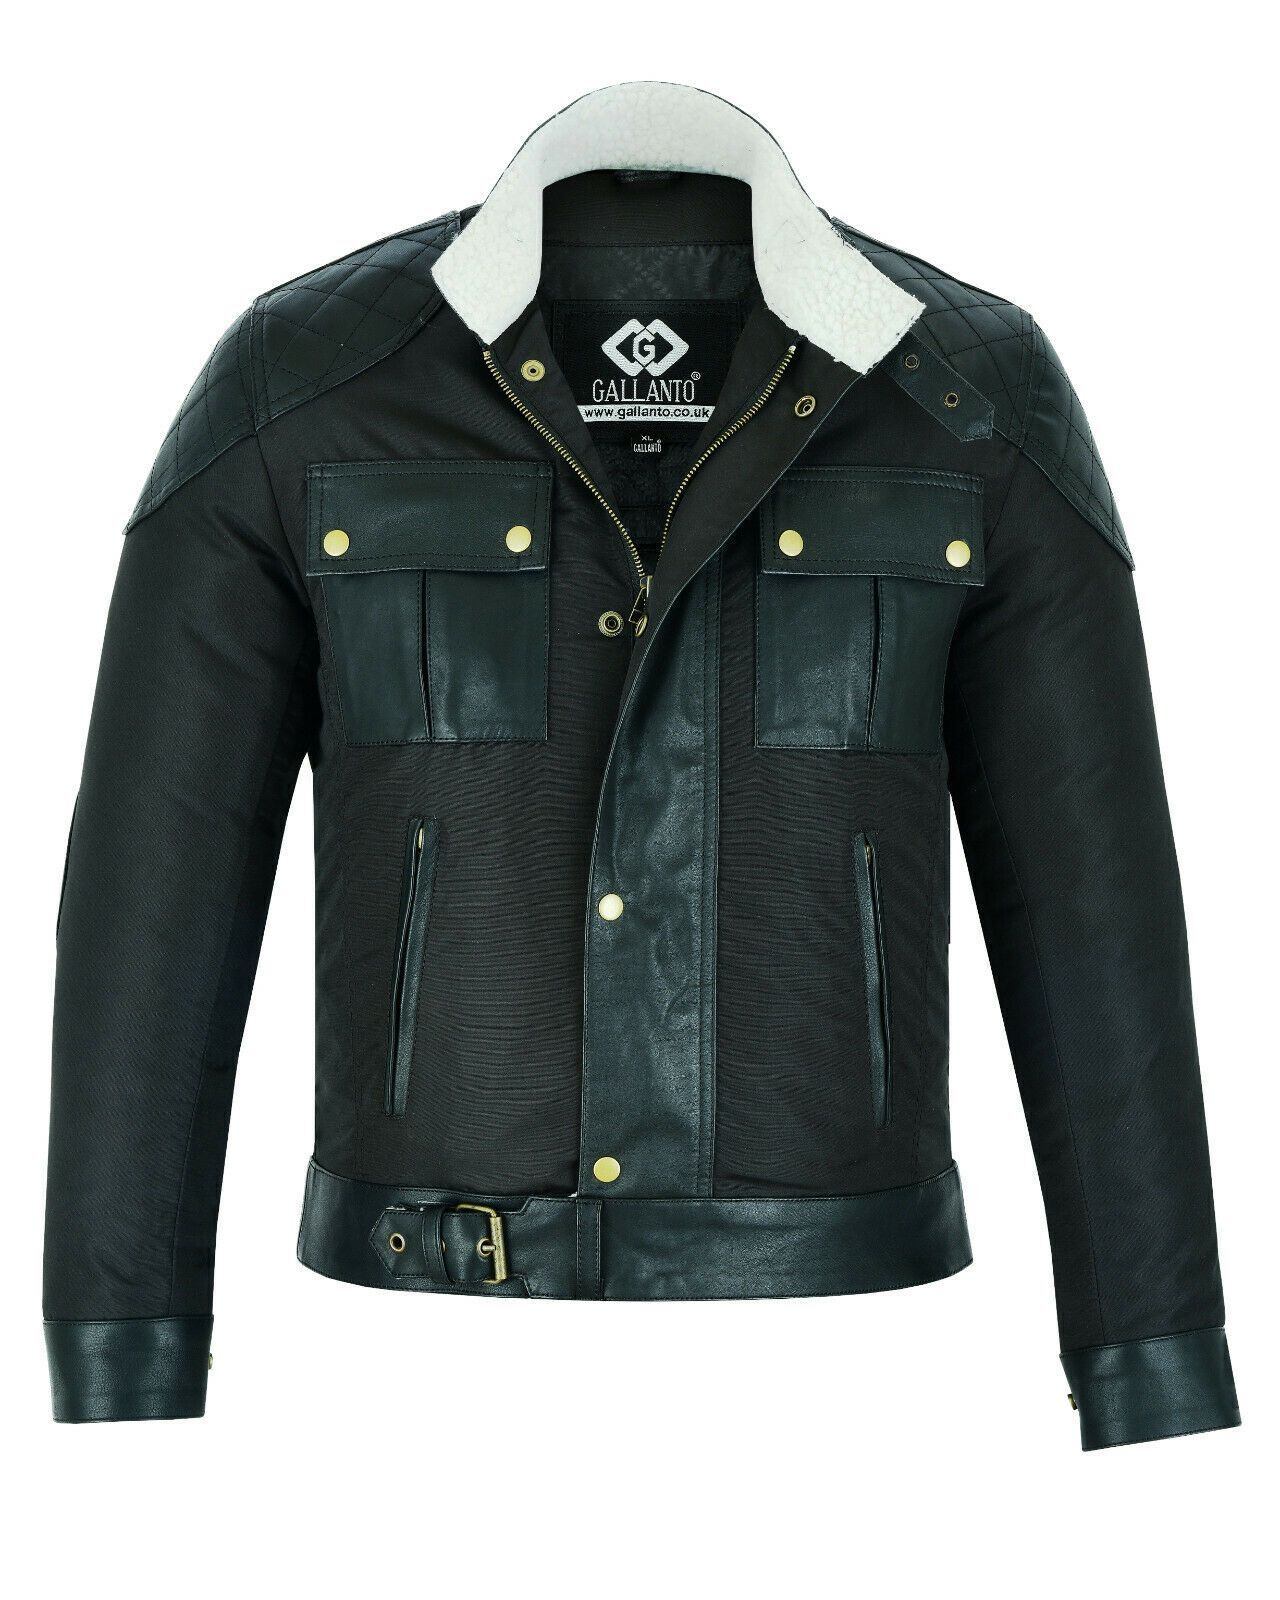 Mens Fabric Fashion Jacket Biker Style with Cream Fur & Leather Taslan Sheepskin